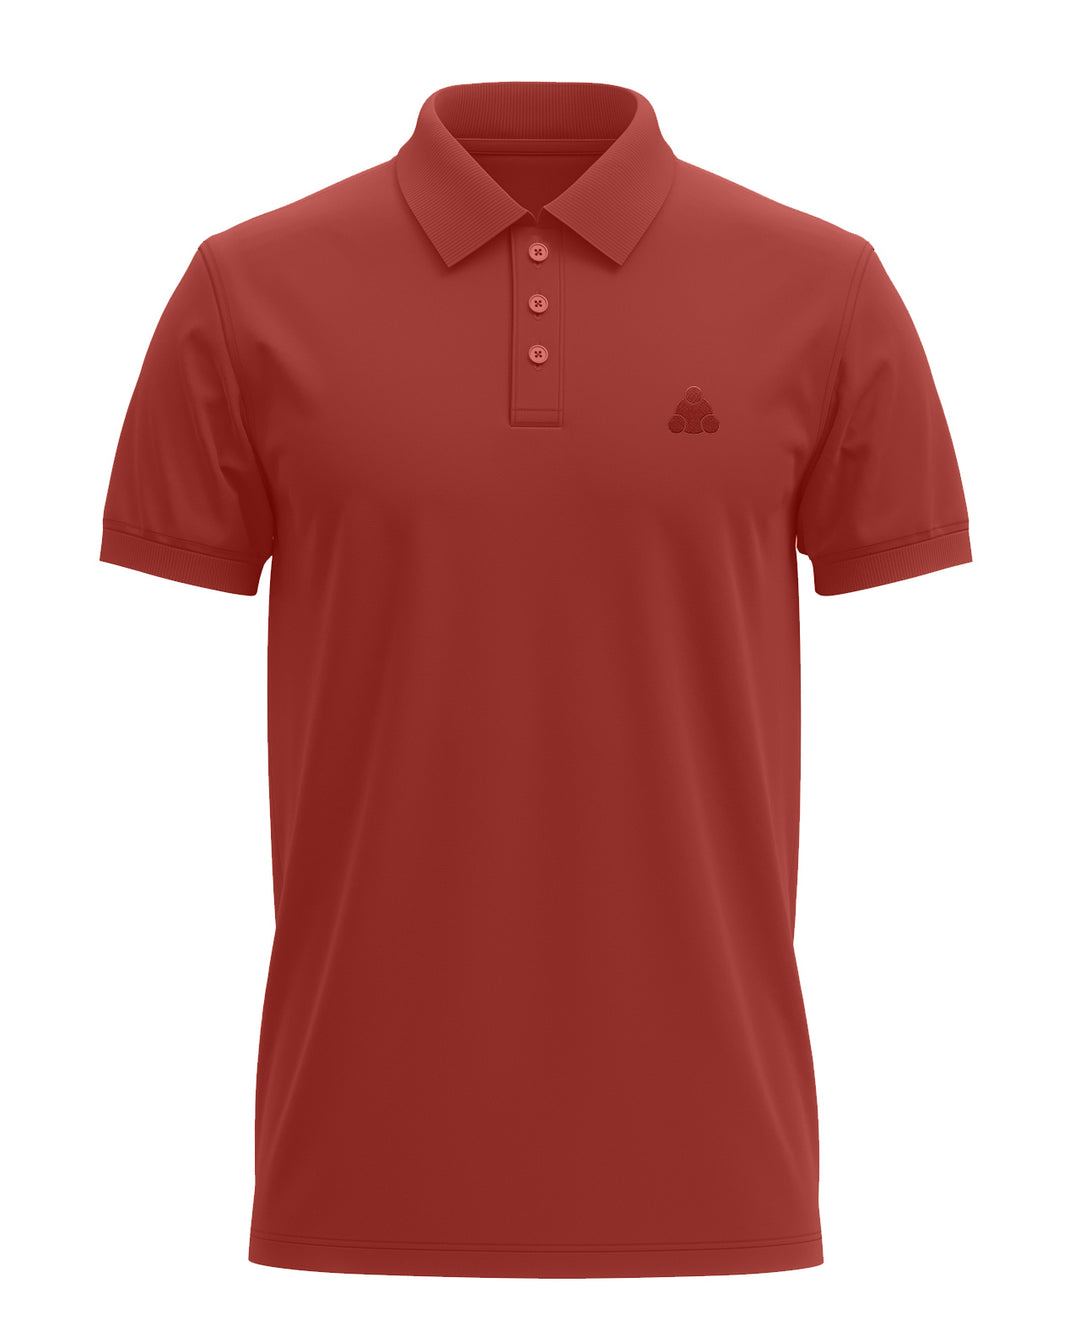 Trinizen Basics Polo T-shirt Embroidered Logo - Brick Red